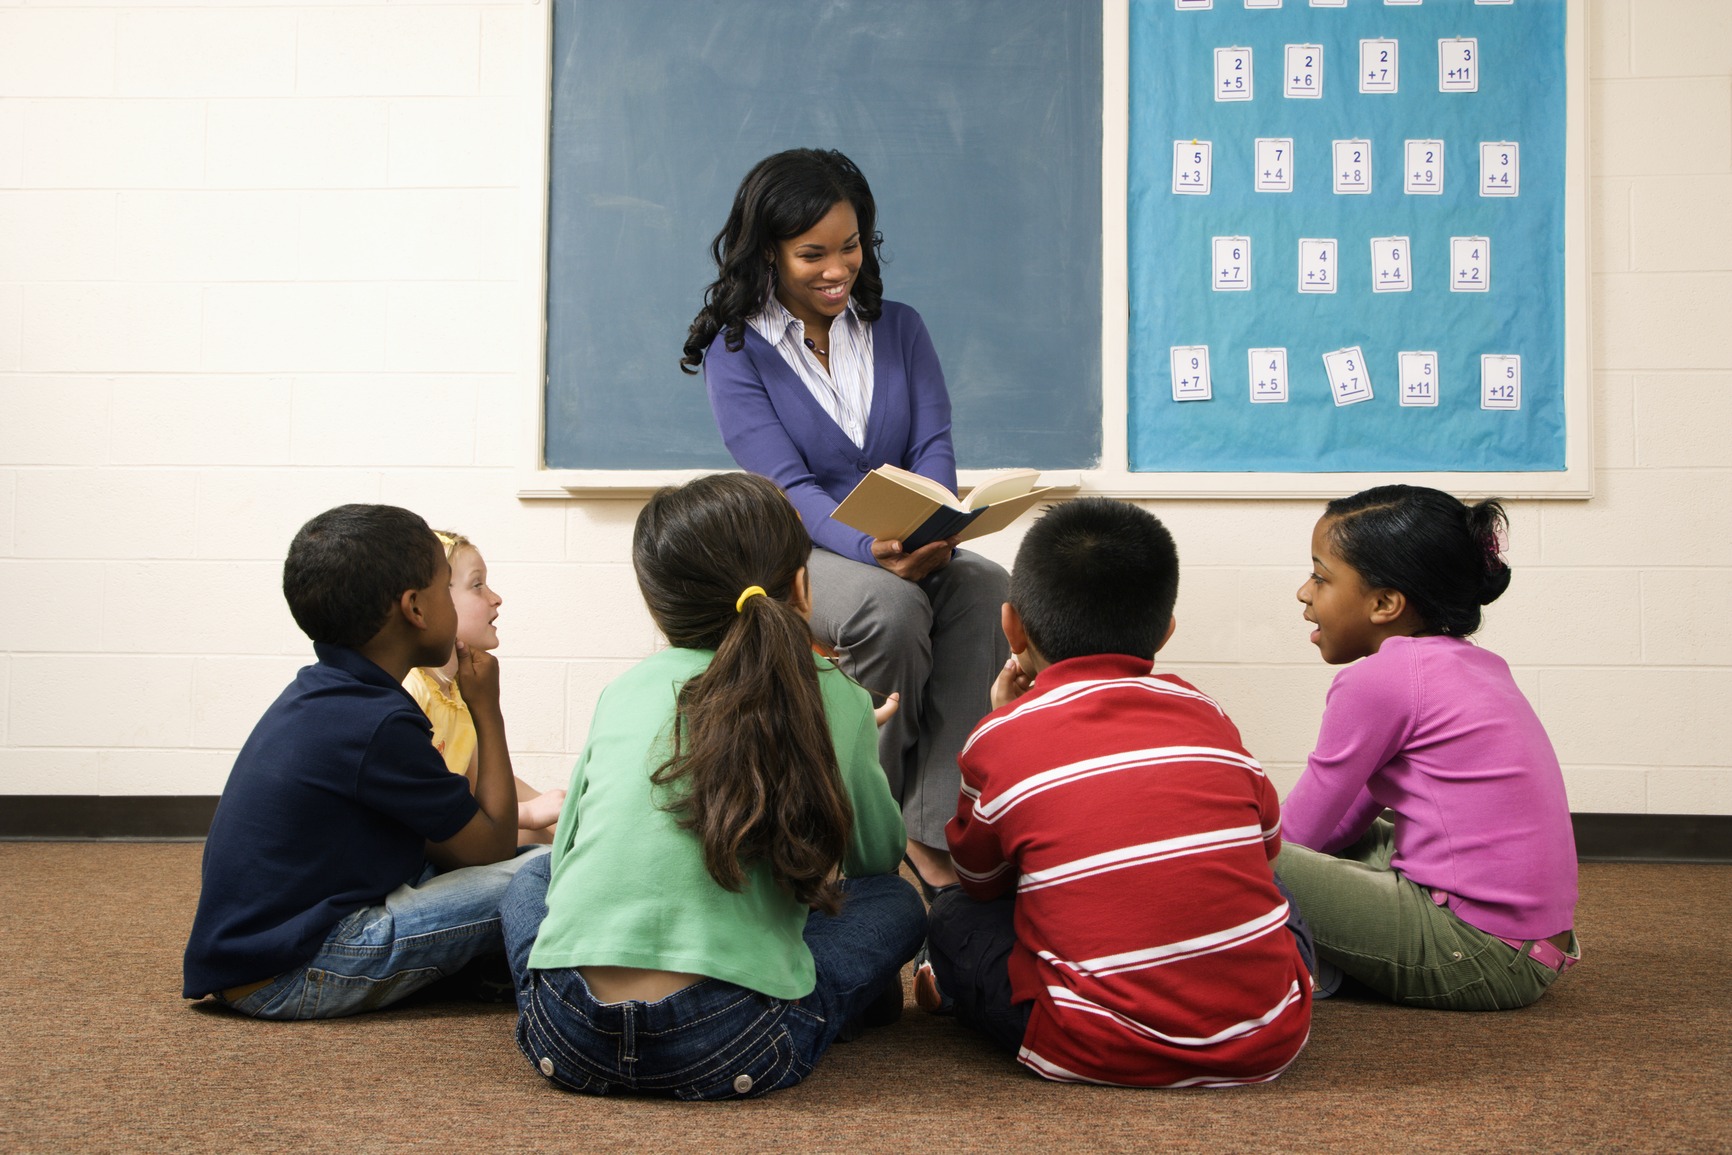 Effective read aloud strategies for classroom